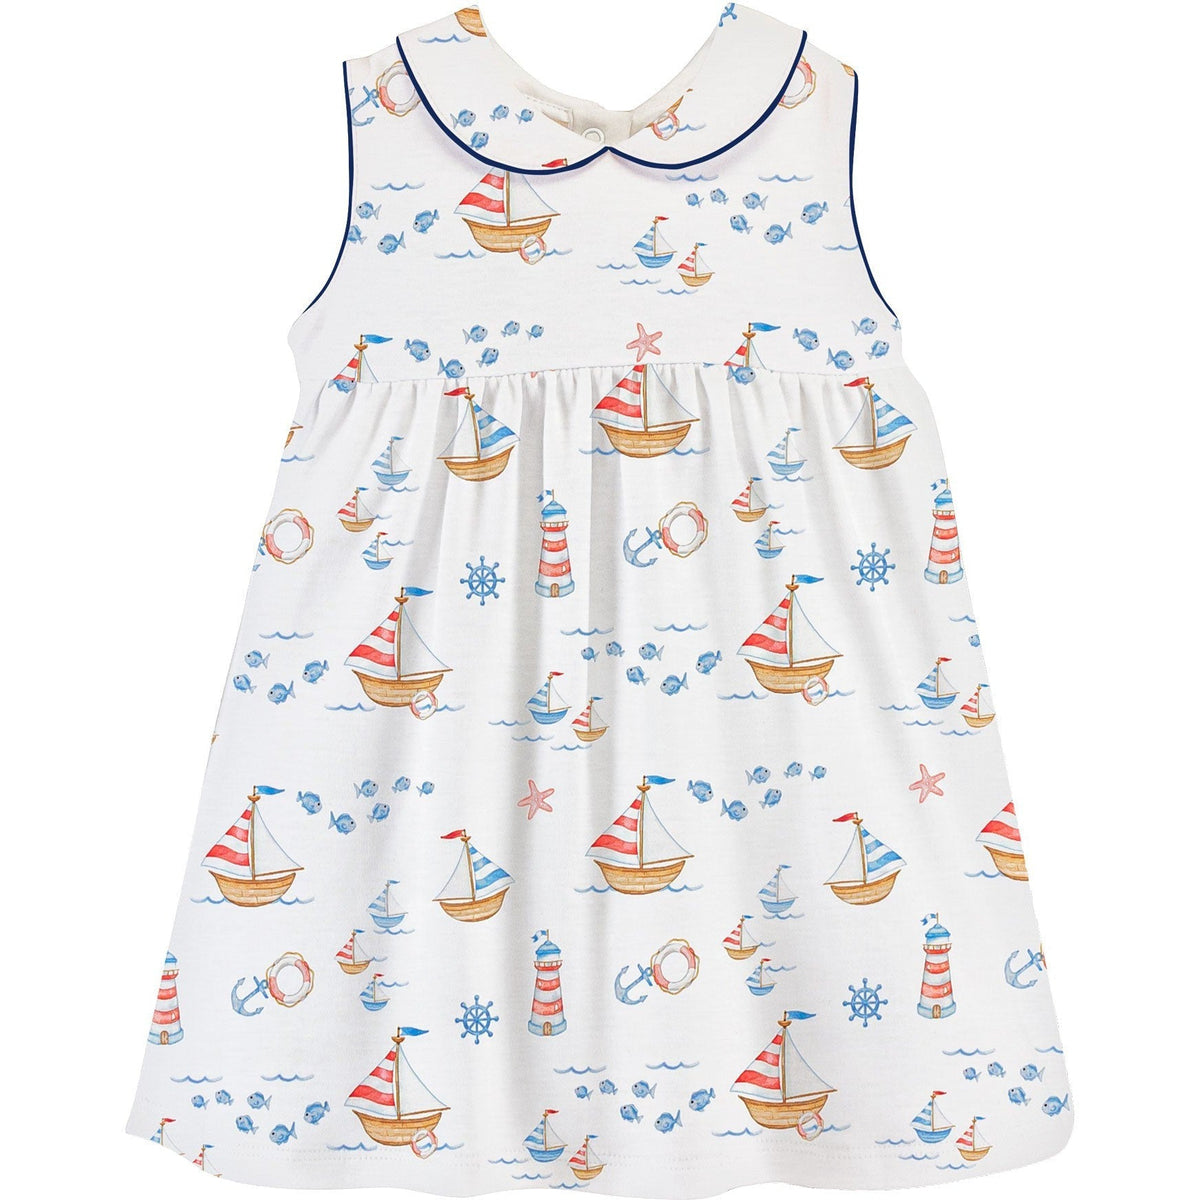 Baby Club Chic Ocean Adventure Dress With Round Collar